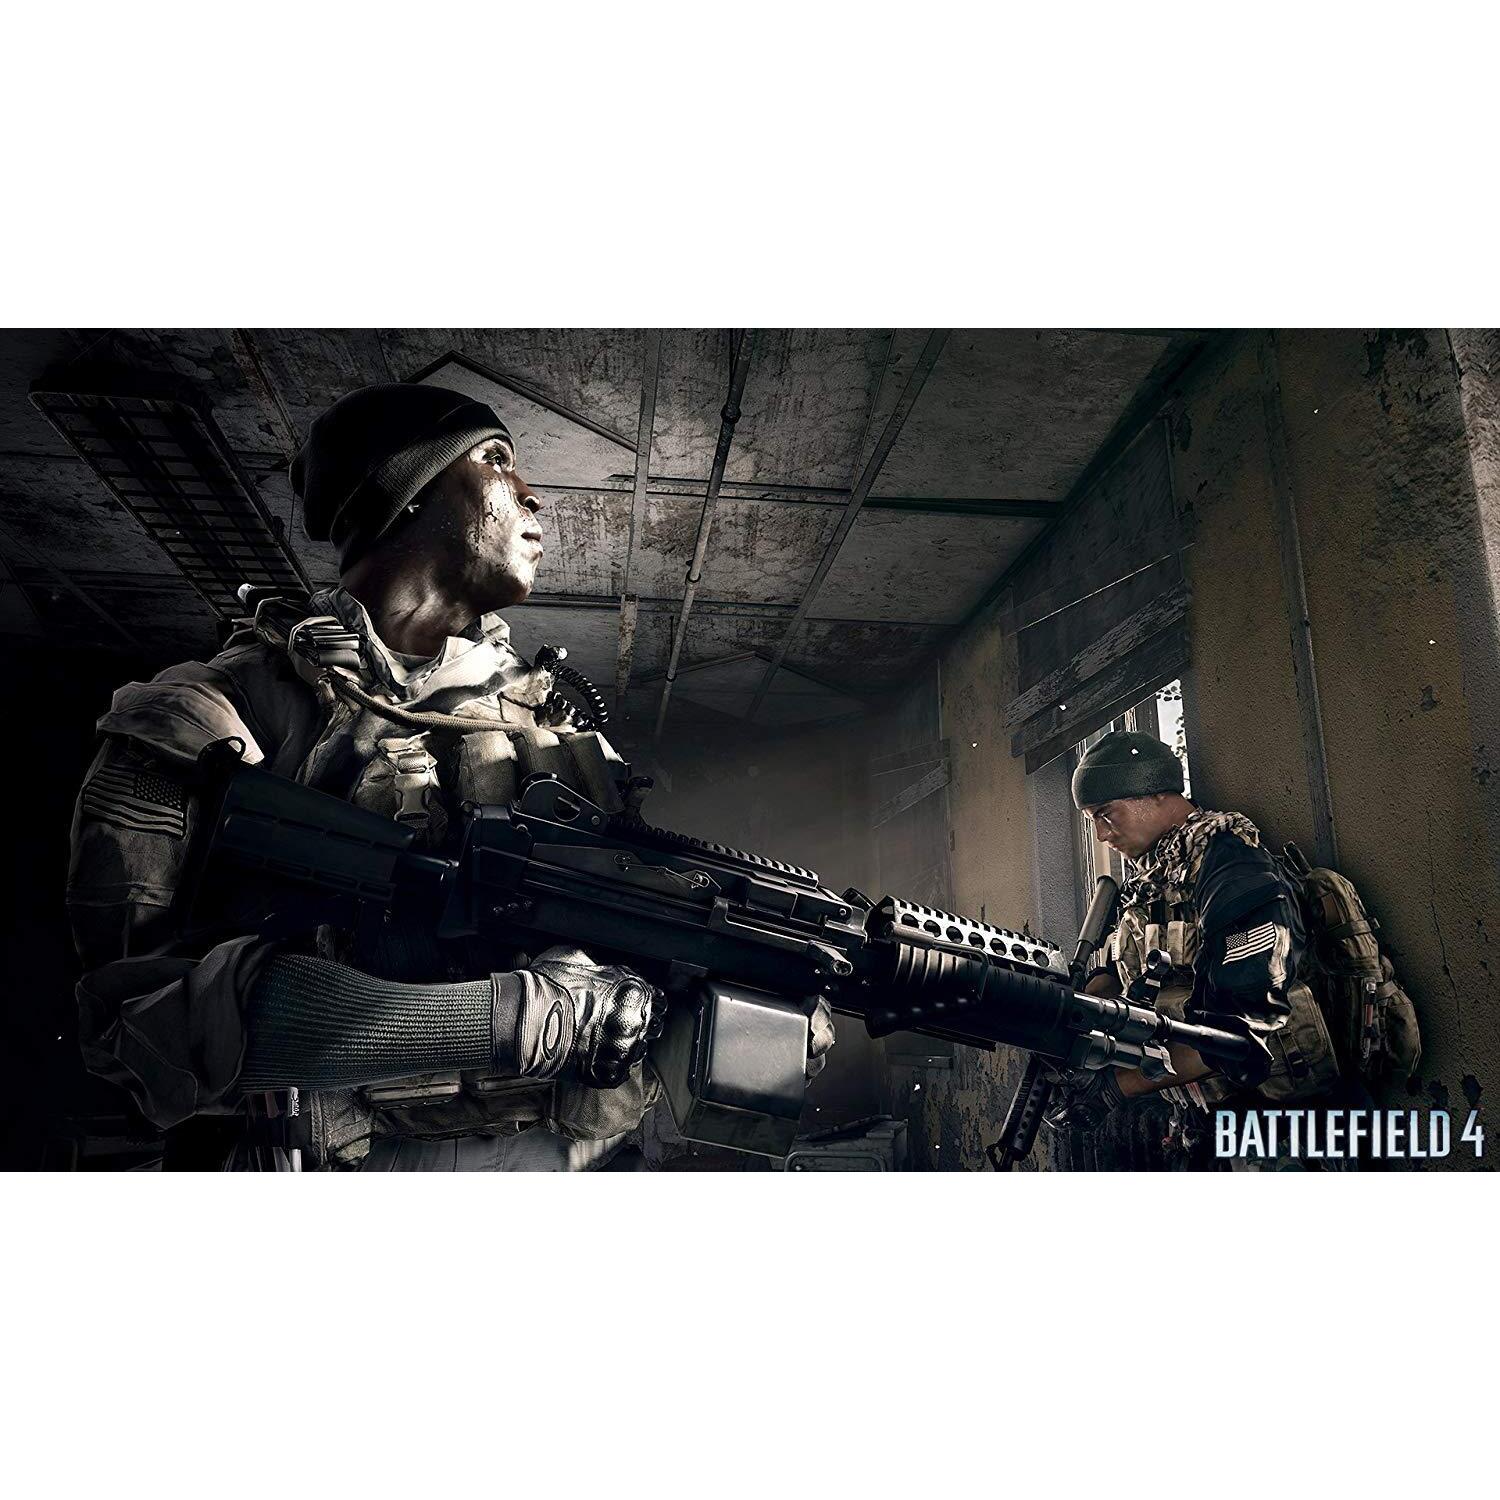 Battlefield 4 kopen - €3.99